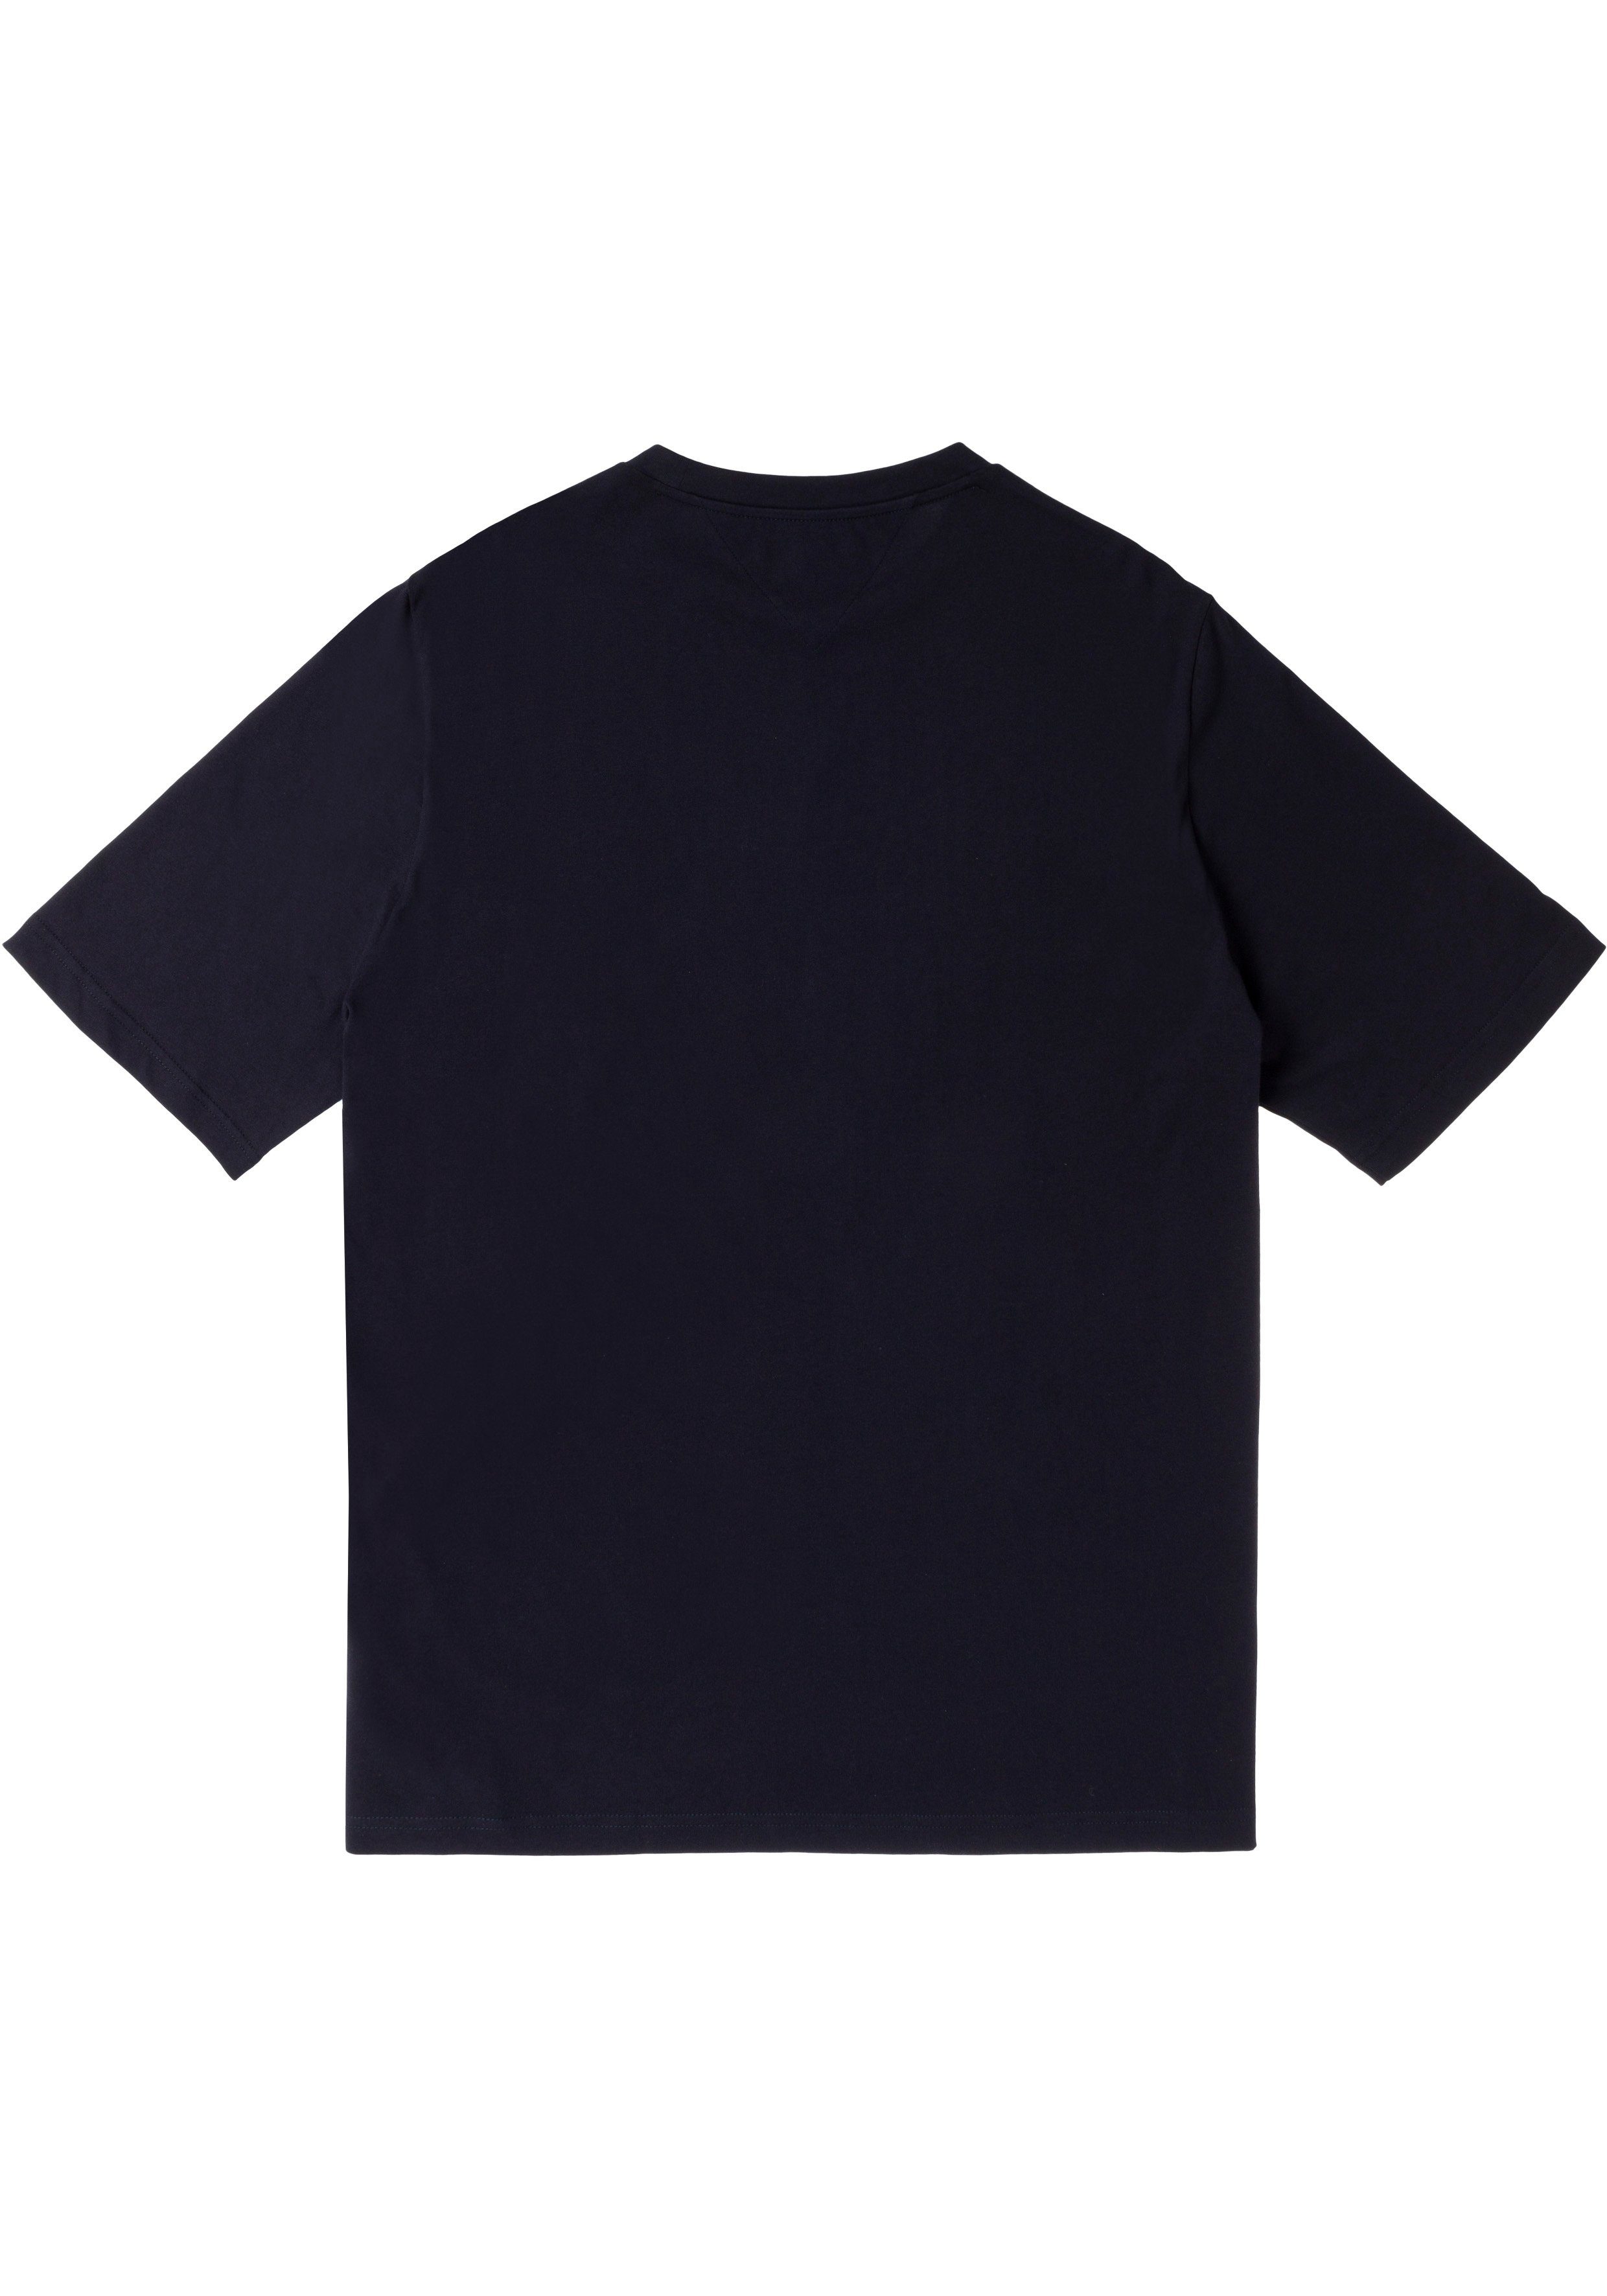 Tommy Hilfiger Big & Tall der Logoschriftzug BT-TOMMY Brust TEE-B mit blau Hilfiger LOGO T-Shirt Tommy auf